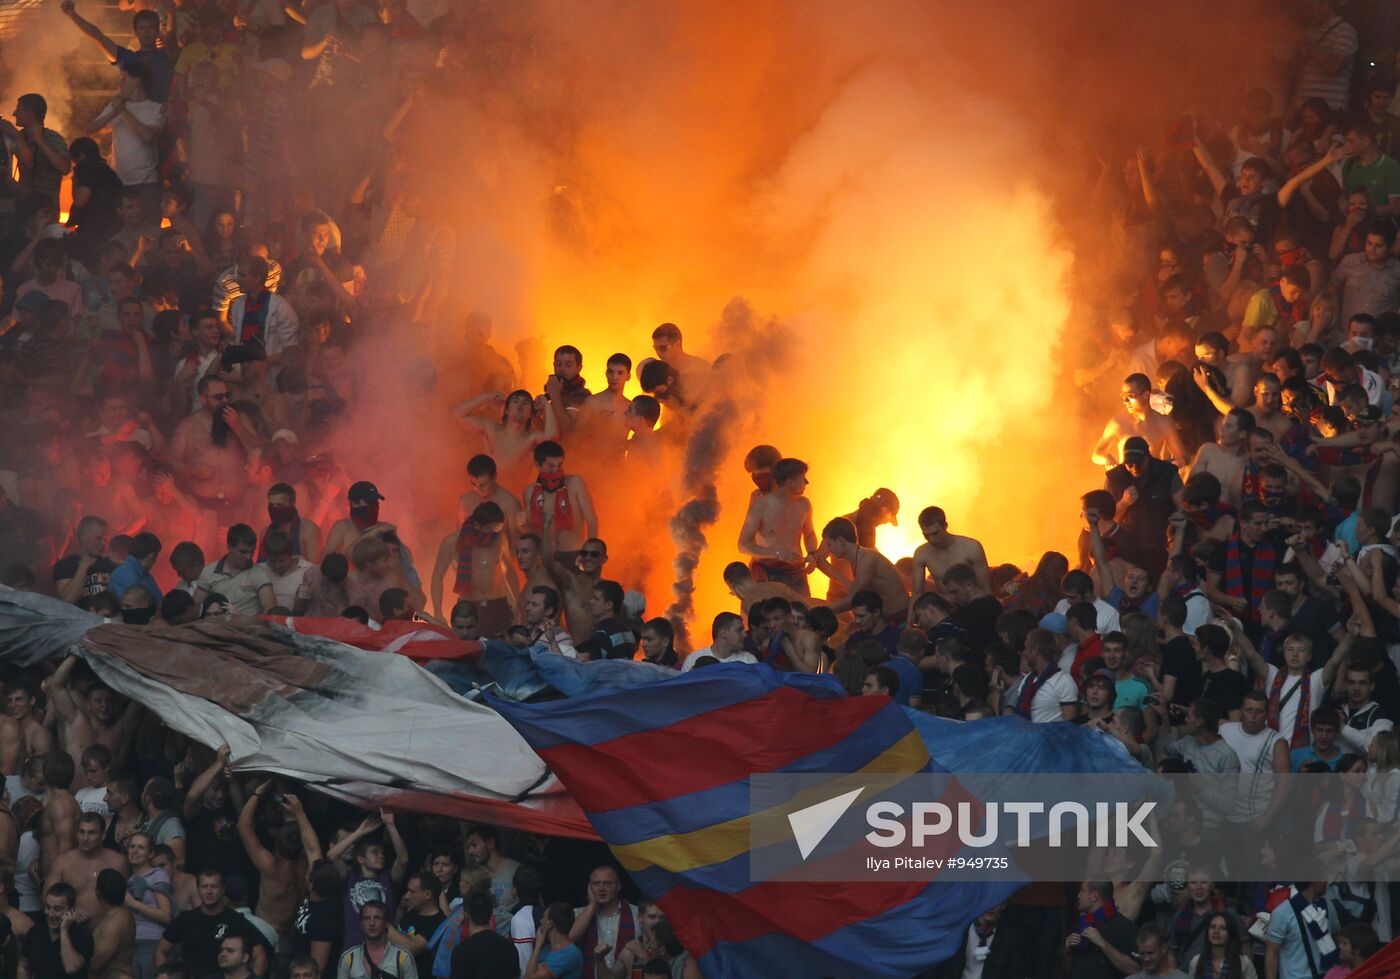 Russian Football Premier League. Spartak Moscow vs. CSKA